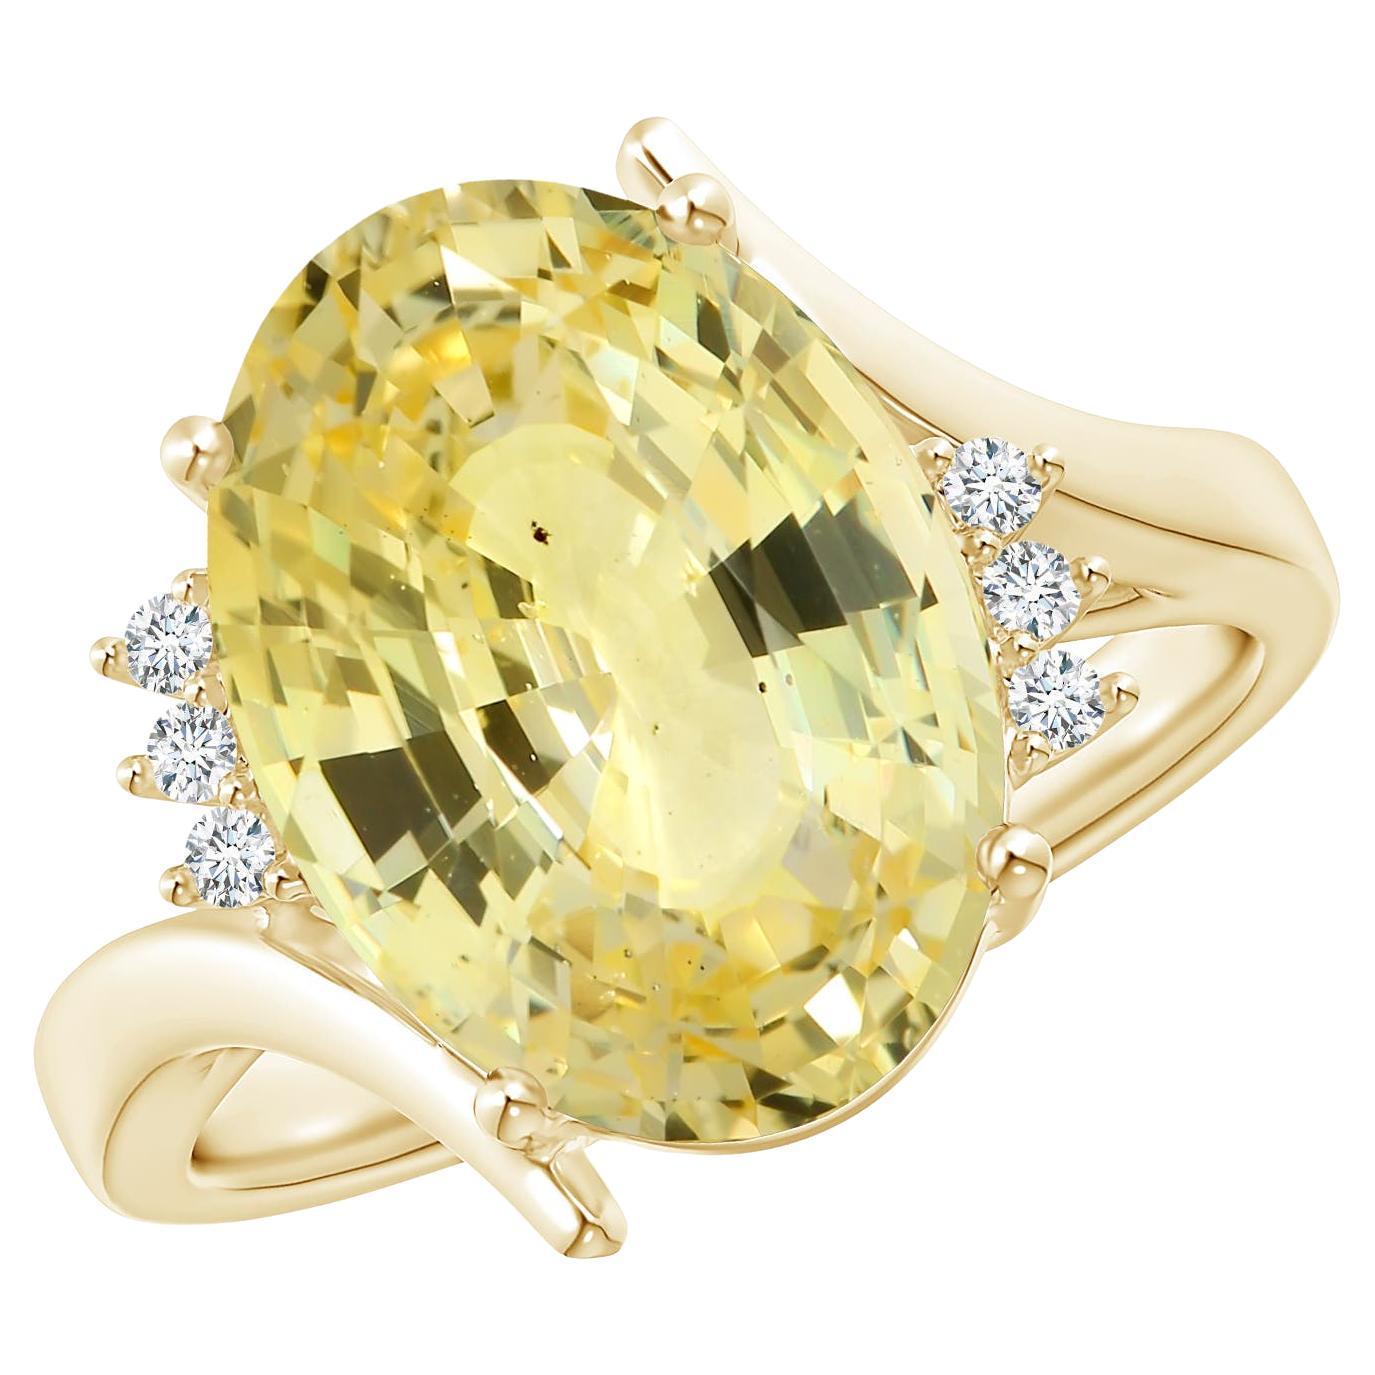 En vente :  Angara, bague bypass en or jaune, saphir jaune naturel certifié GIA et diamants